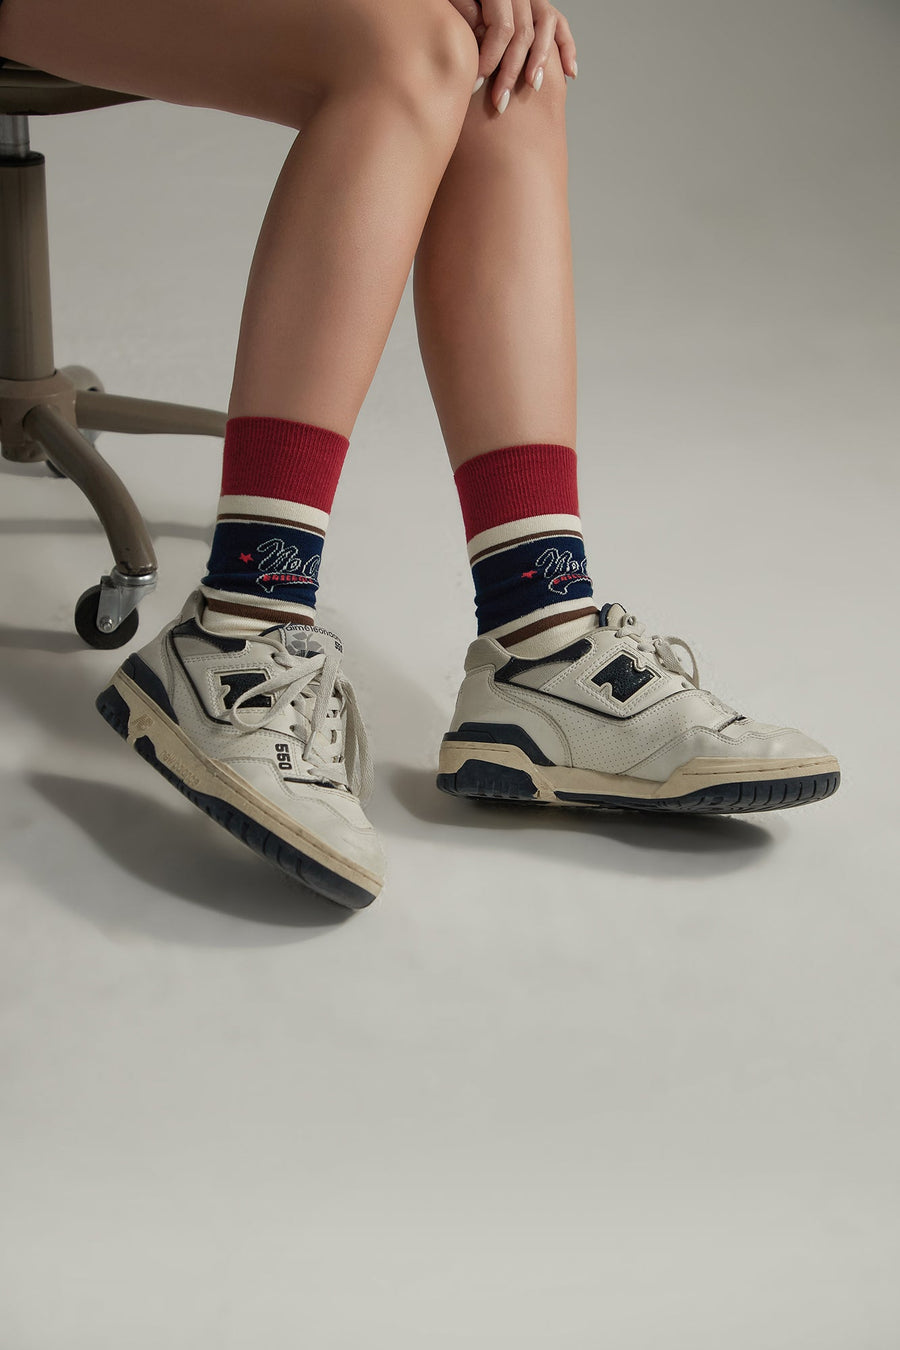 Vintage Basebeall Themed Colorblocked High Socks